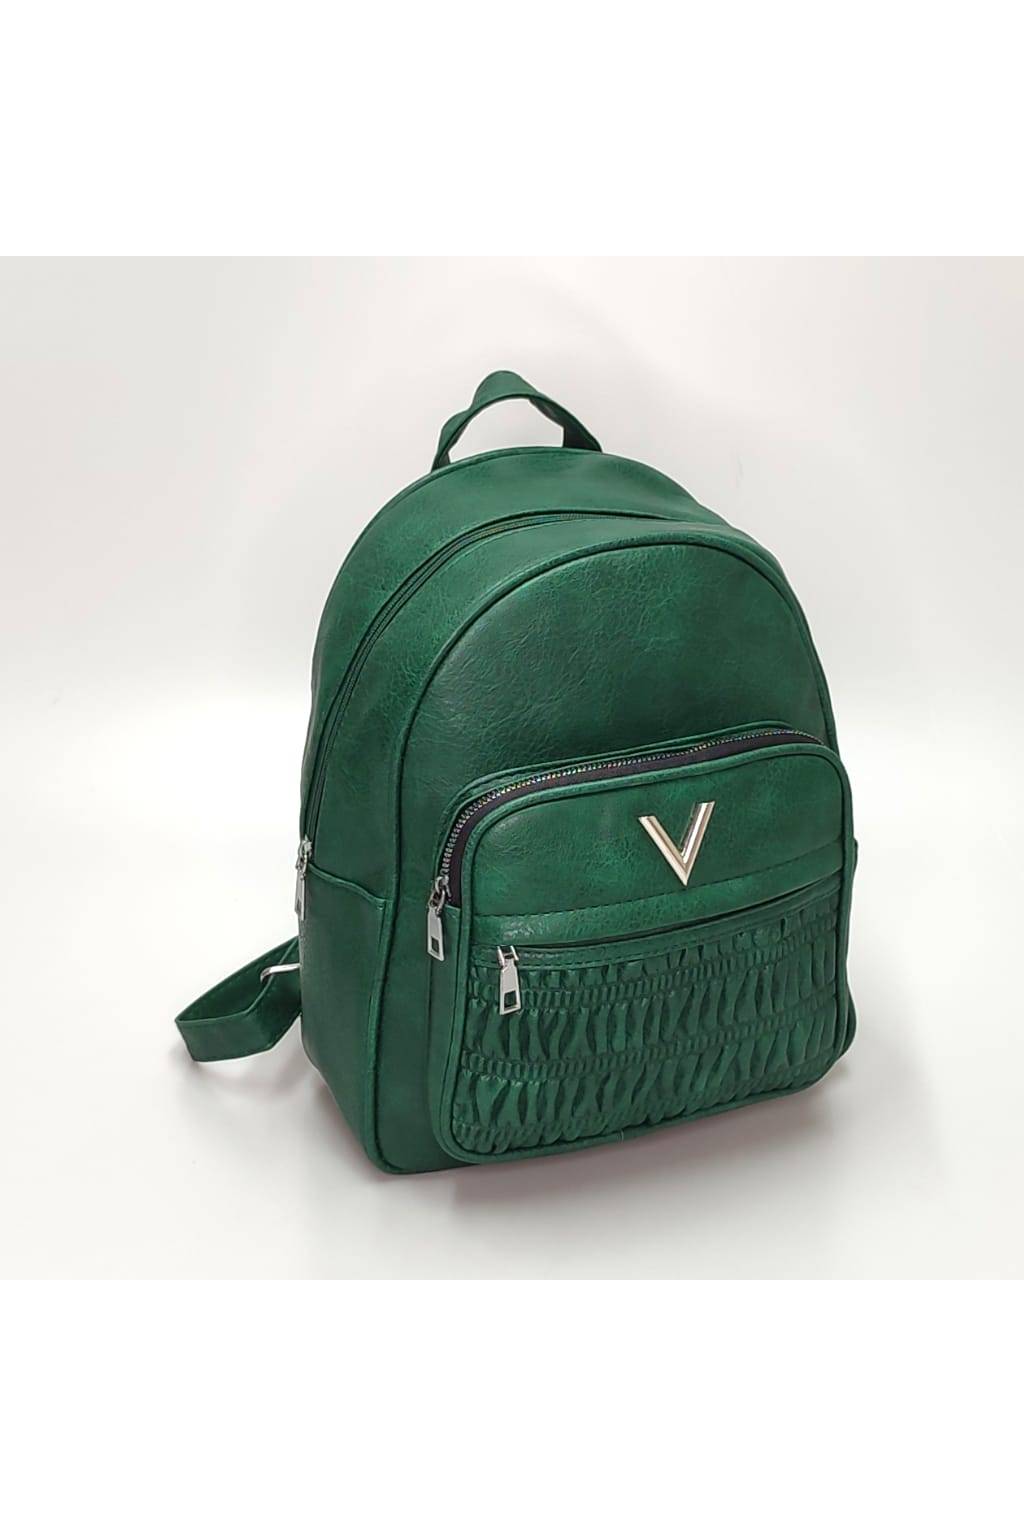 Dámsky ruksak 2565 zelený www.kabelky vypredaj (1)